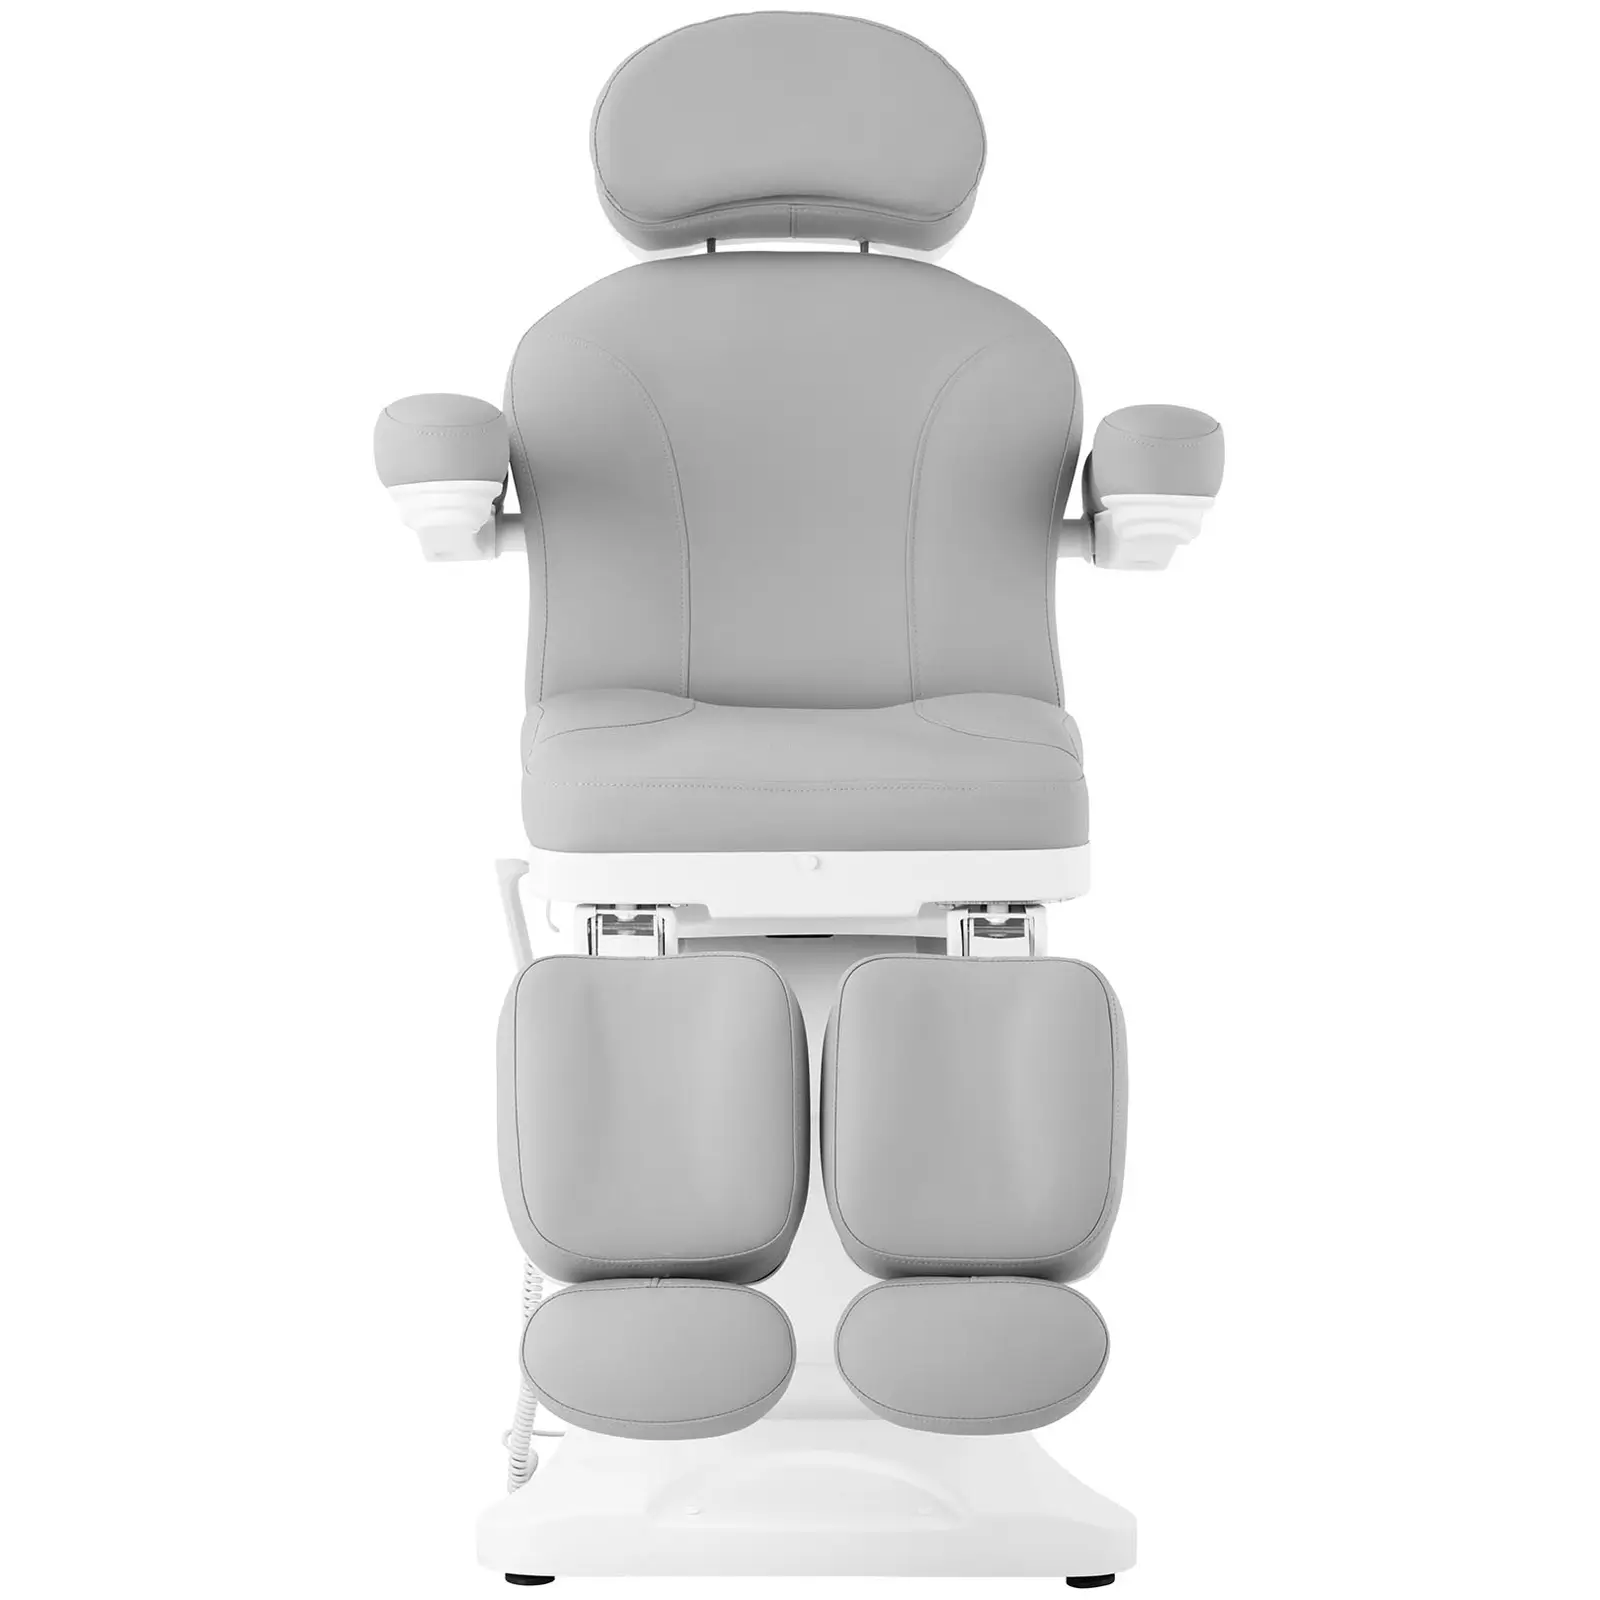 Fotel do pedicure - 350 W - 150 kg - szary, biały